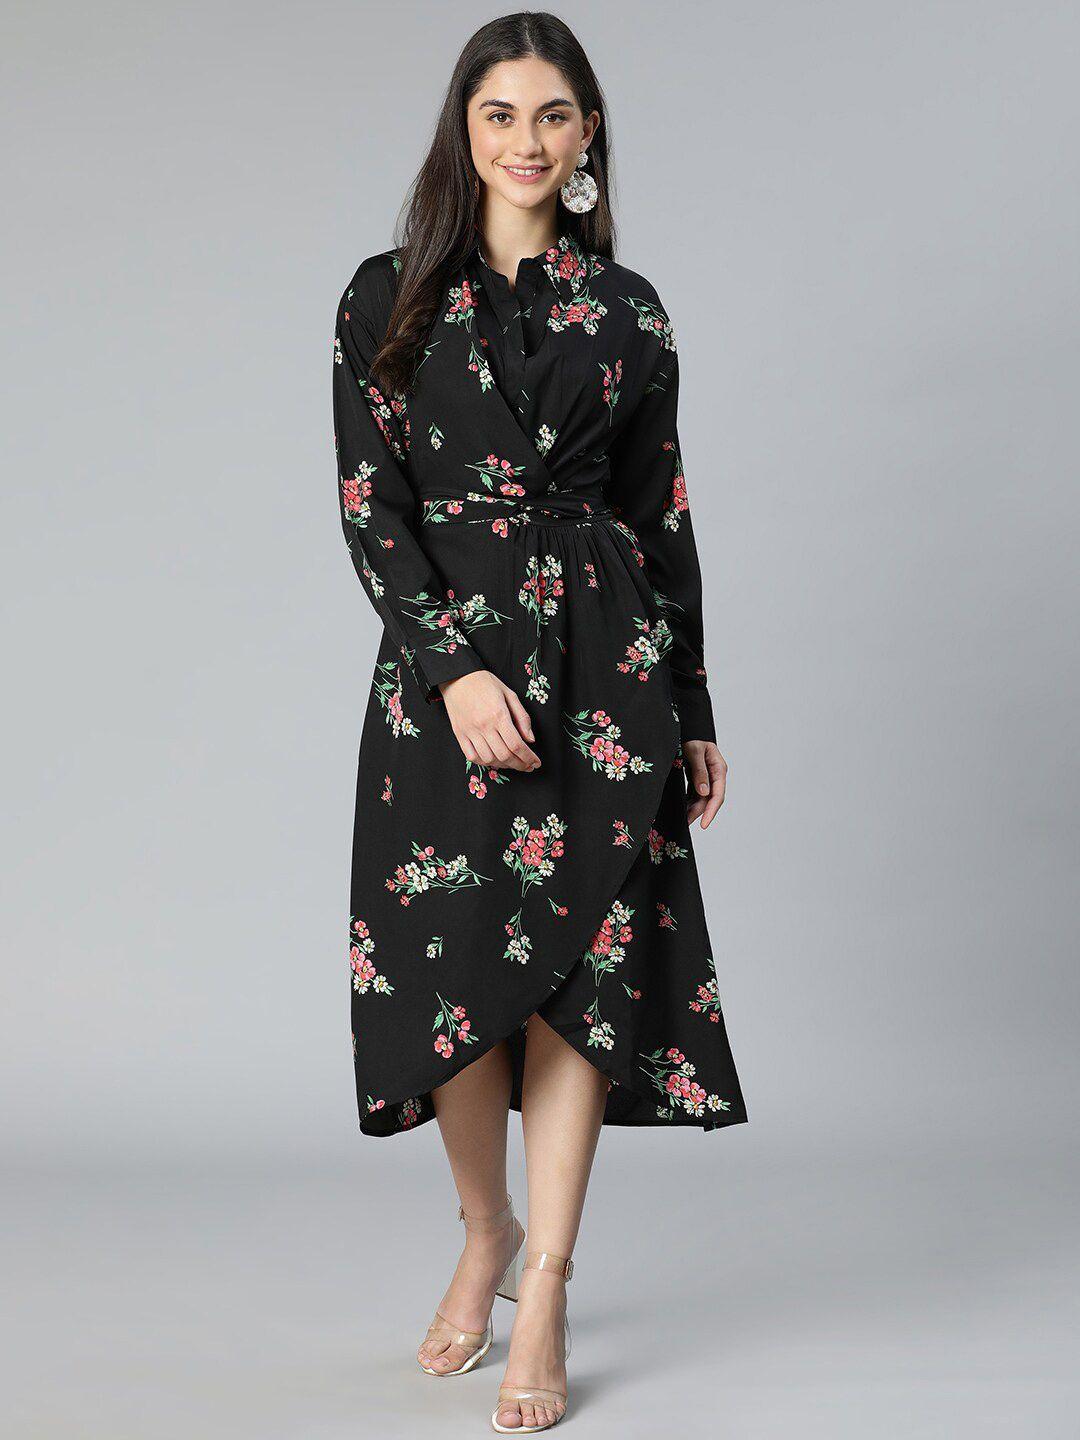 oxolloxo black floral midi dress